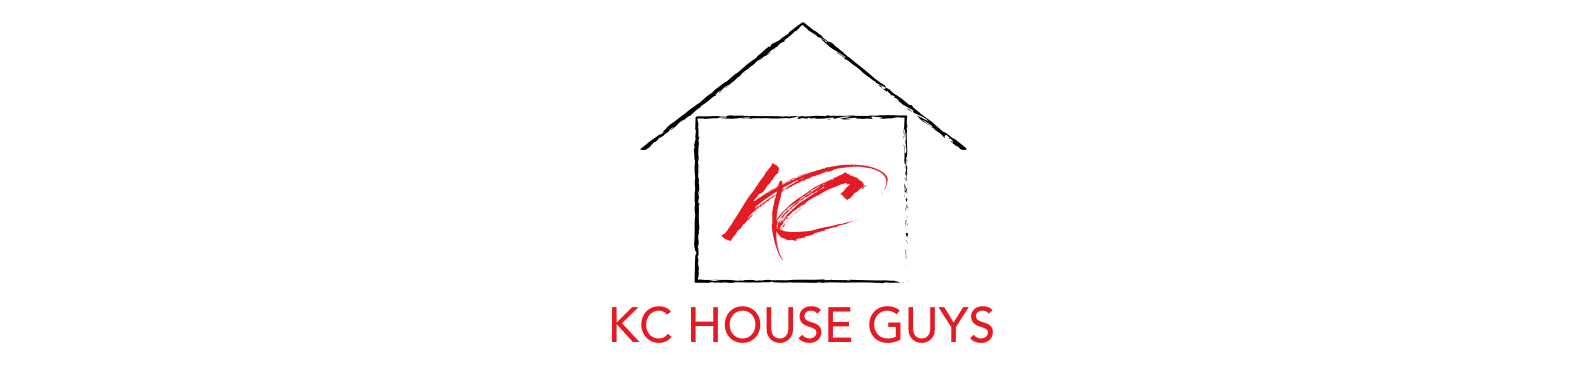 kchomecashbuyers.com logo